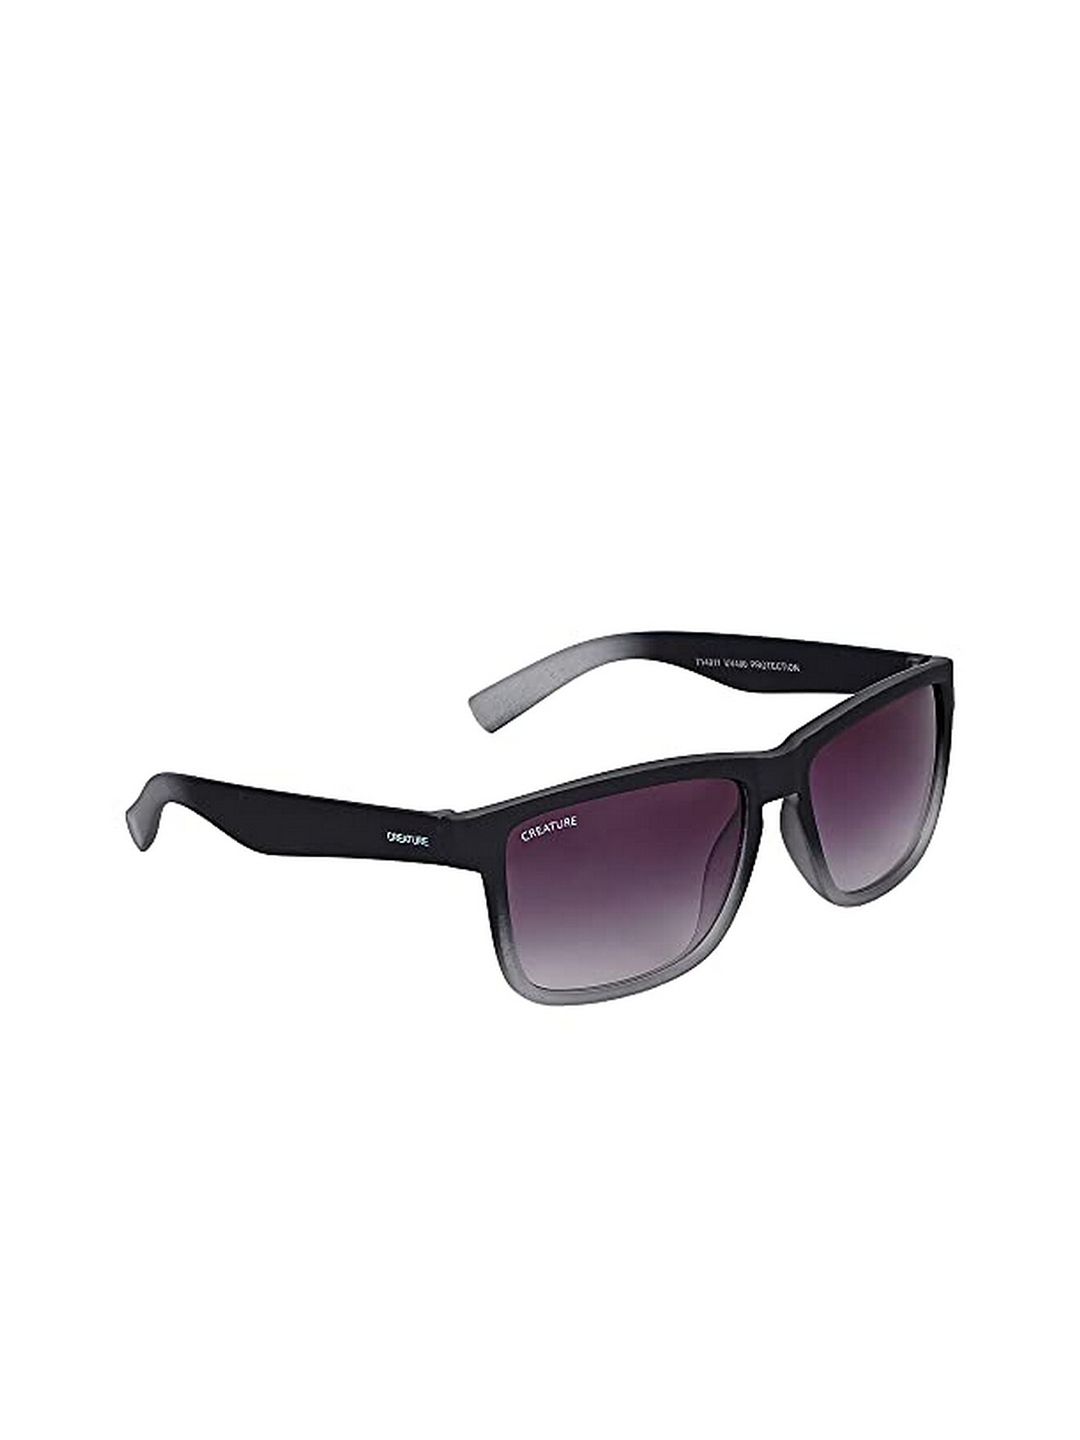 Creature Unisex Purple Lens & Black Wayfarer Sunglasses with UV Protected Lens SUN-062-GRY Price in India